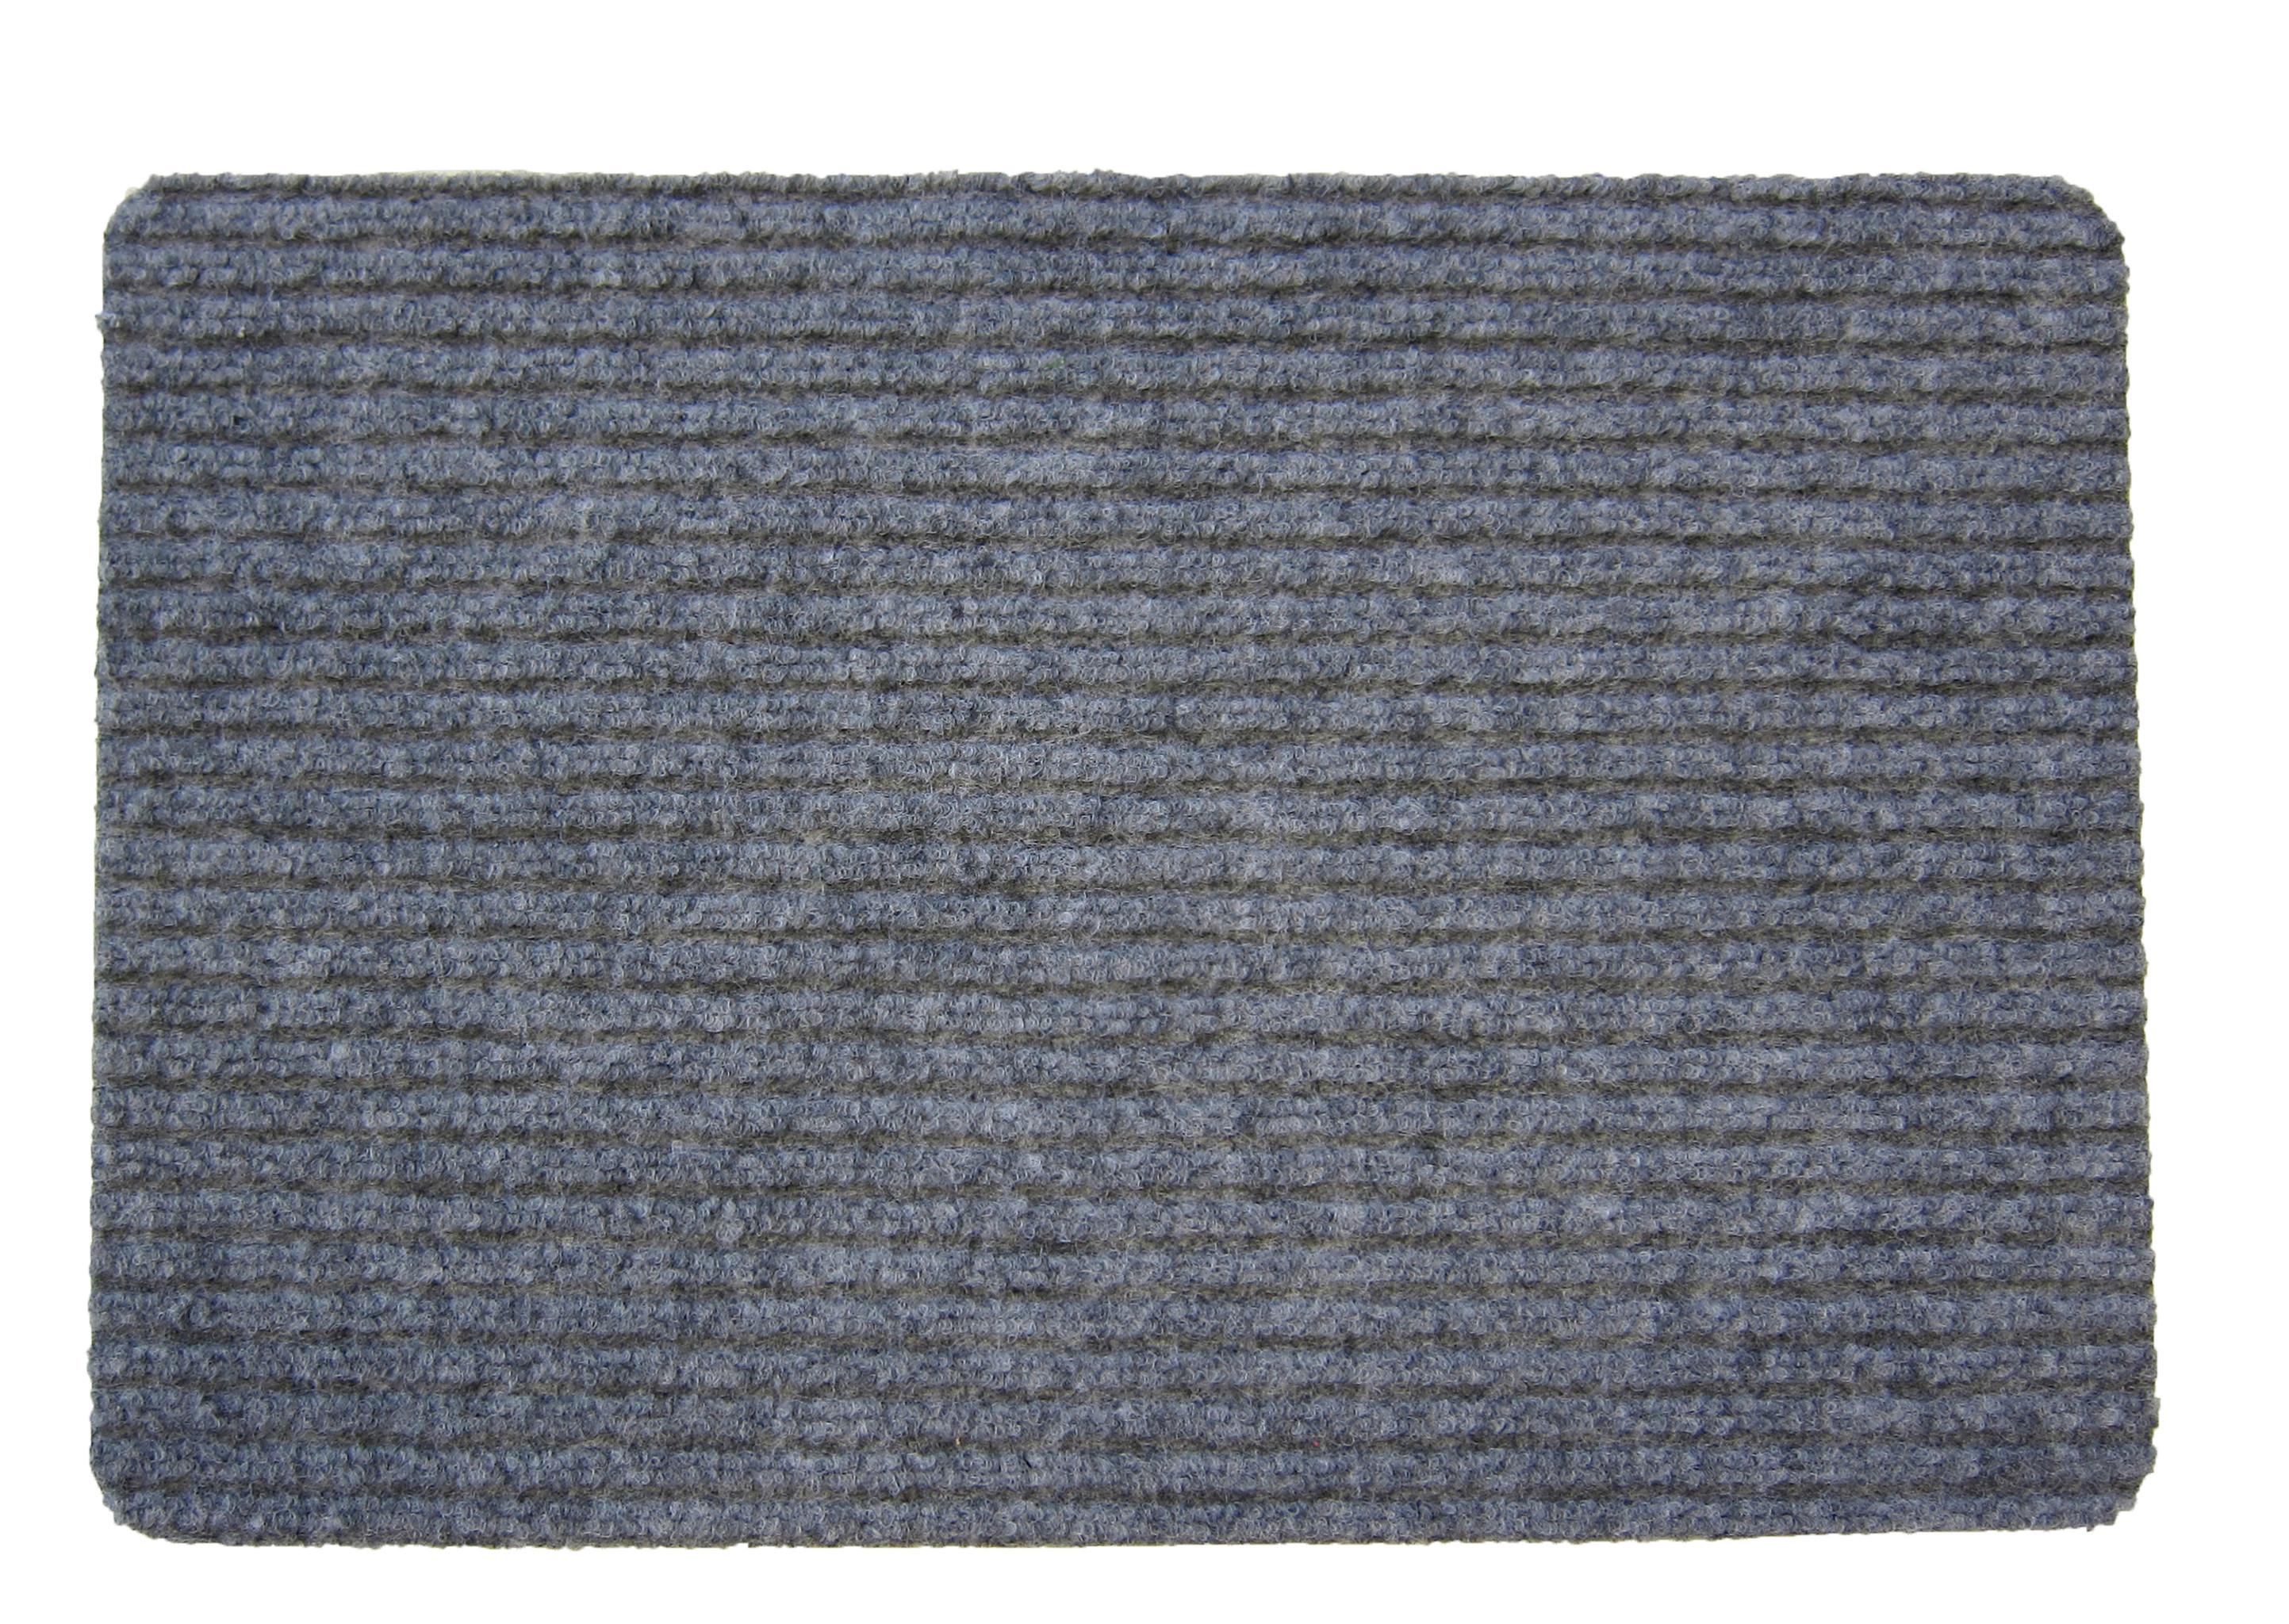 Fußmatte Mona in Grau ca. 25x60cm - Grau, KONVENTIONELL, Kunststoff (25/60cm) - Modern Living